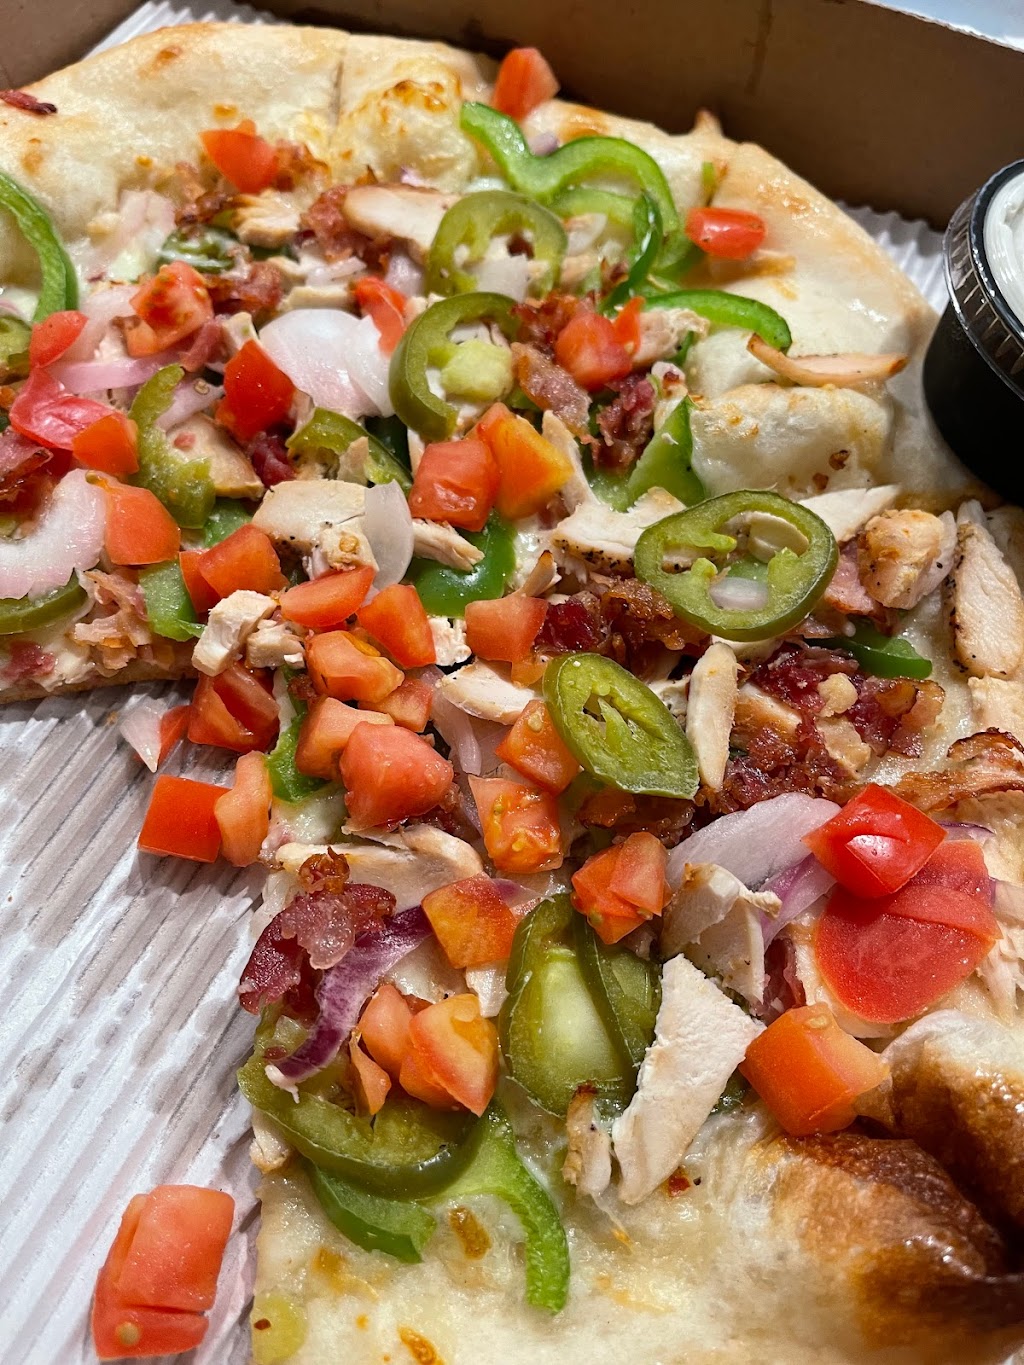 Deweys Pizza | 1520 S 5th St, St Charles, MO 63303, USA | Phone: (636) 724-1111